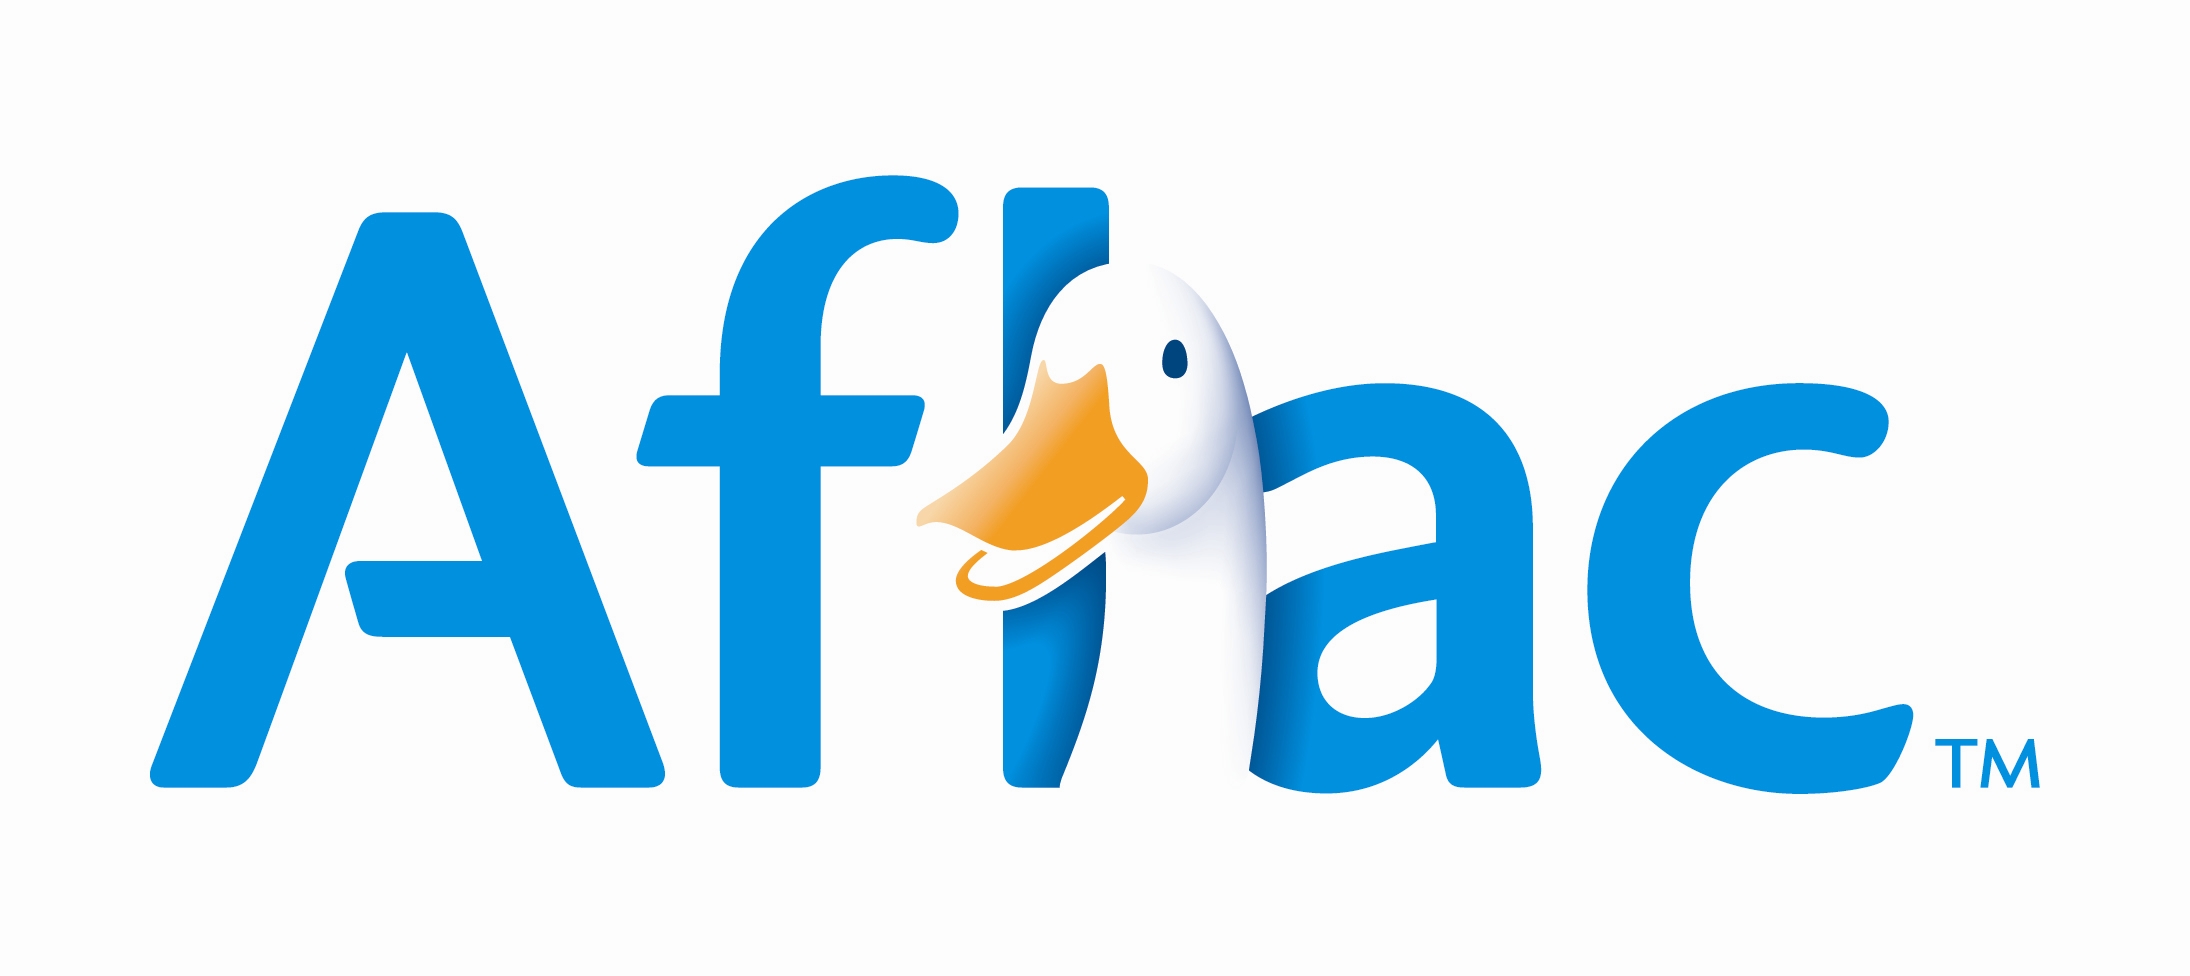 Aflac-Incorporated-logo.jpeg